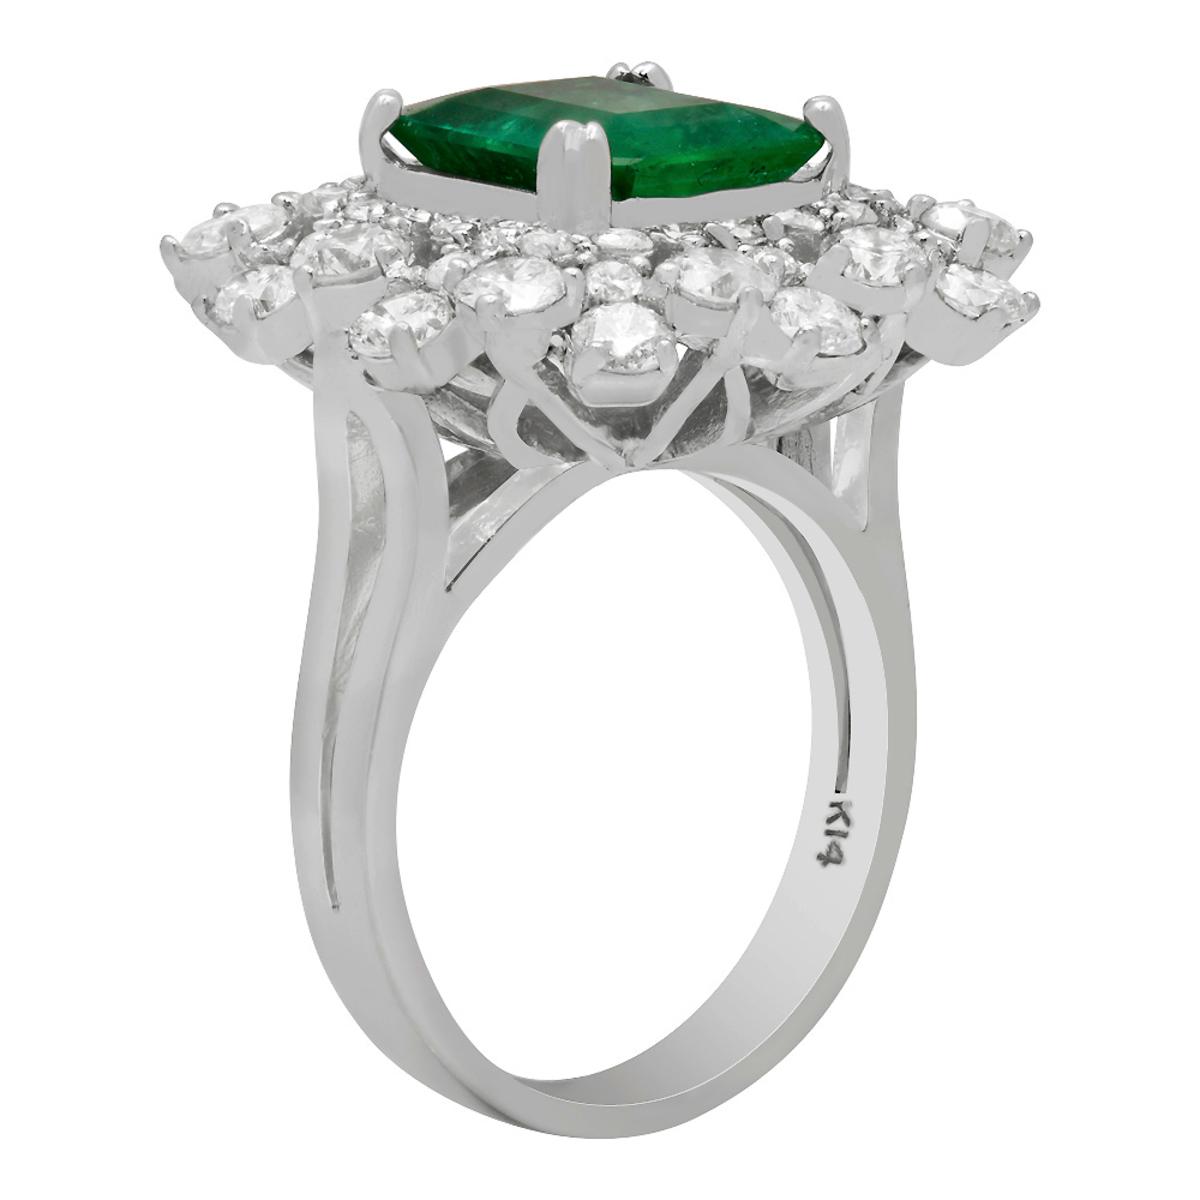 14k White Gold 2.86ct Emerald 2.68ct Diamond Ring